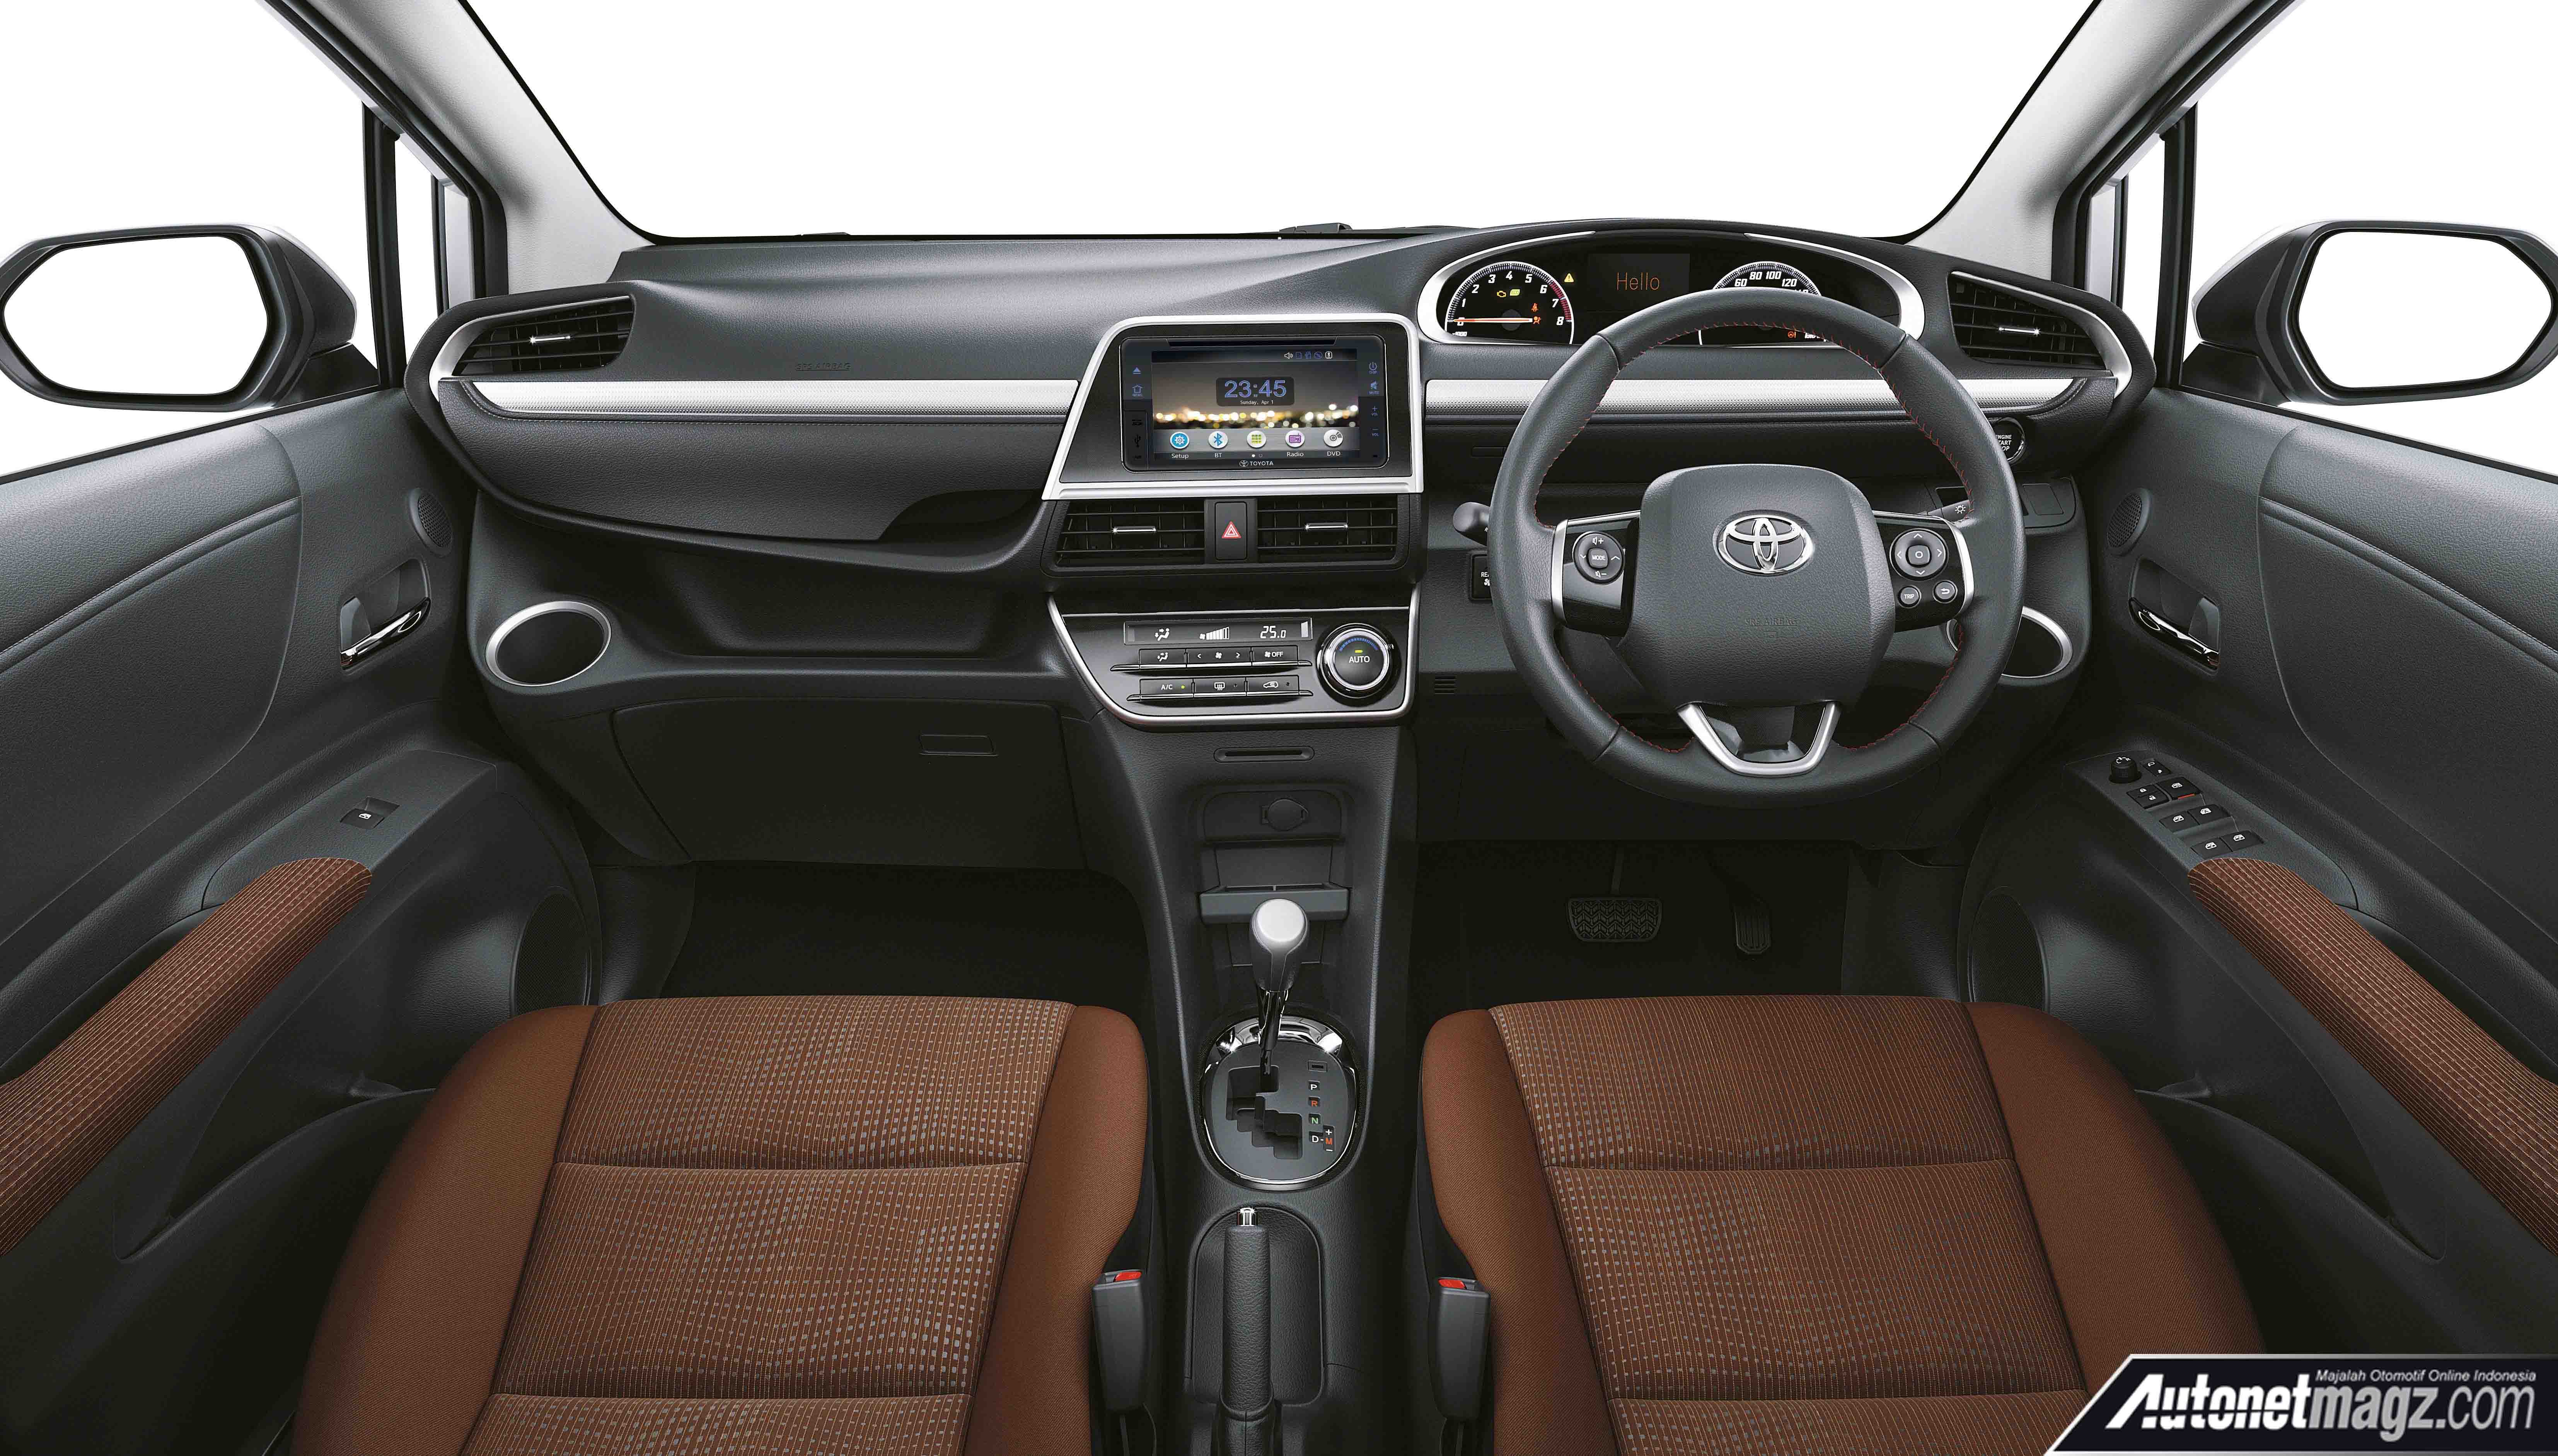 Berita, interior Toyota Sienta Minor Change 2018 Malaysia: Toyota Sienta Dapatkan Minor Change di Malaysia